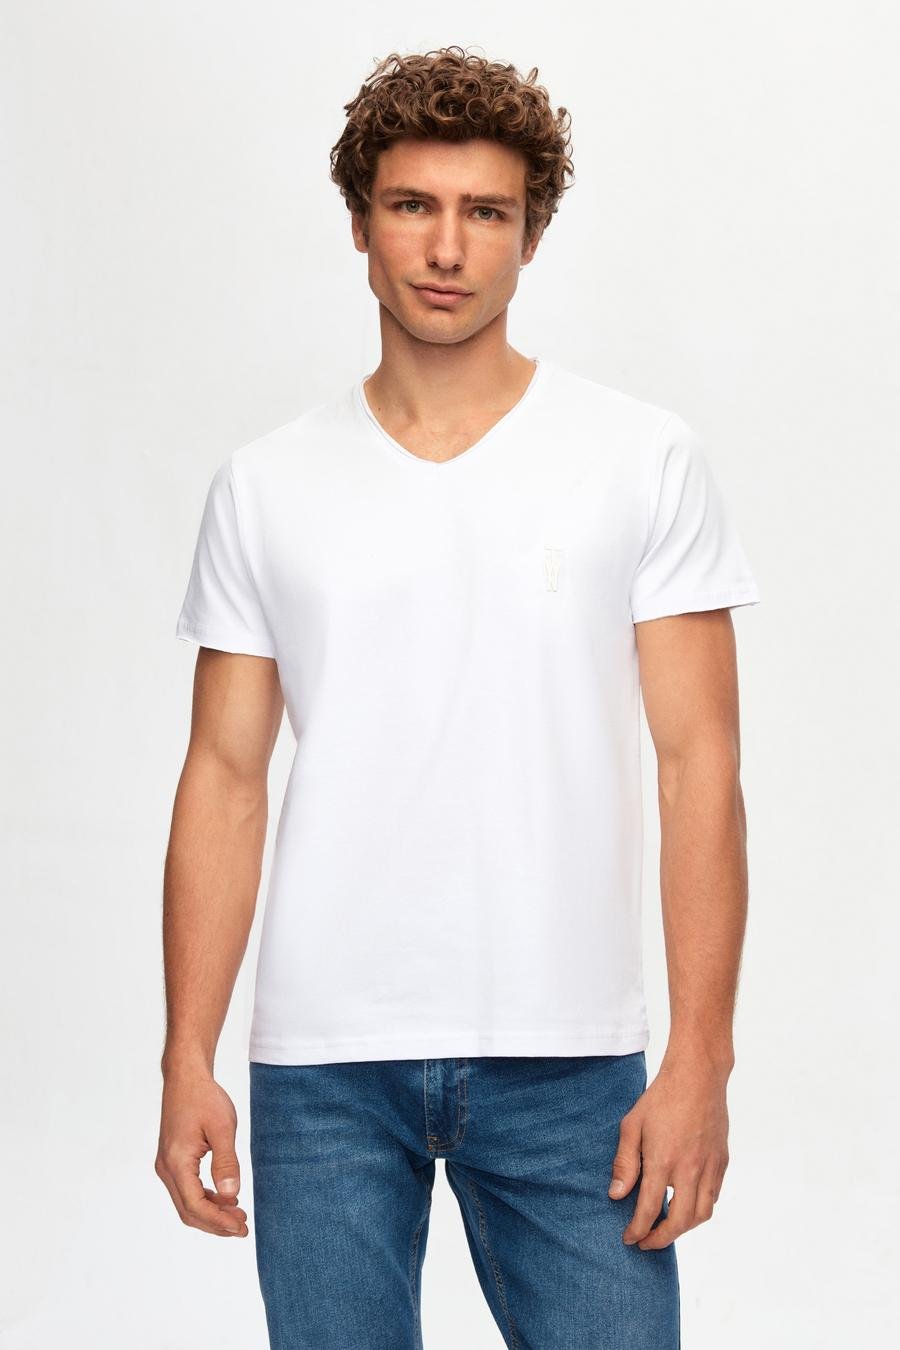 Twn Slim Fit Beyaz Düz Örgü Pamuklu Logo Baskılı T-Shirt - 8683218252731 | D'S Damat